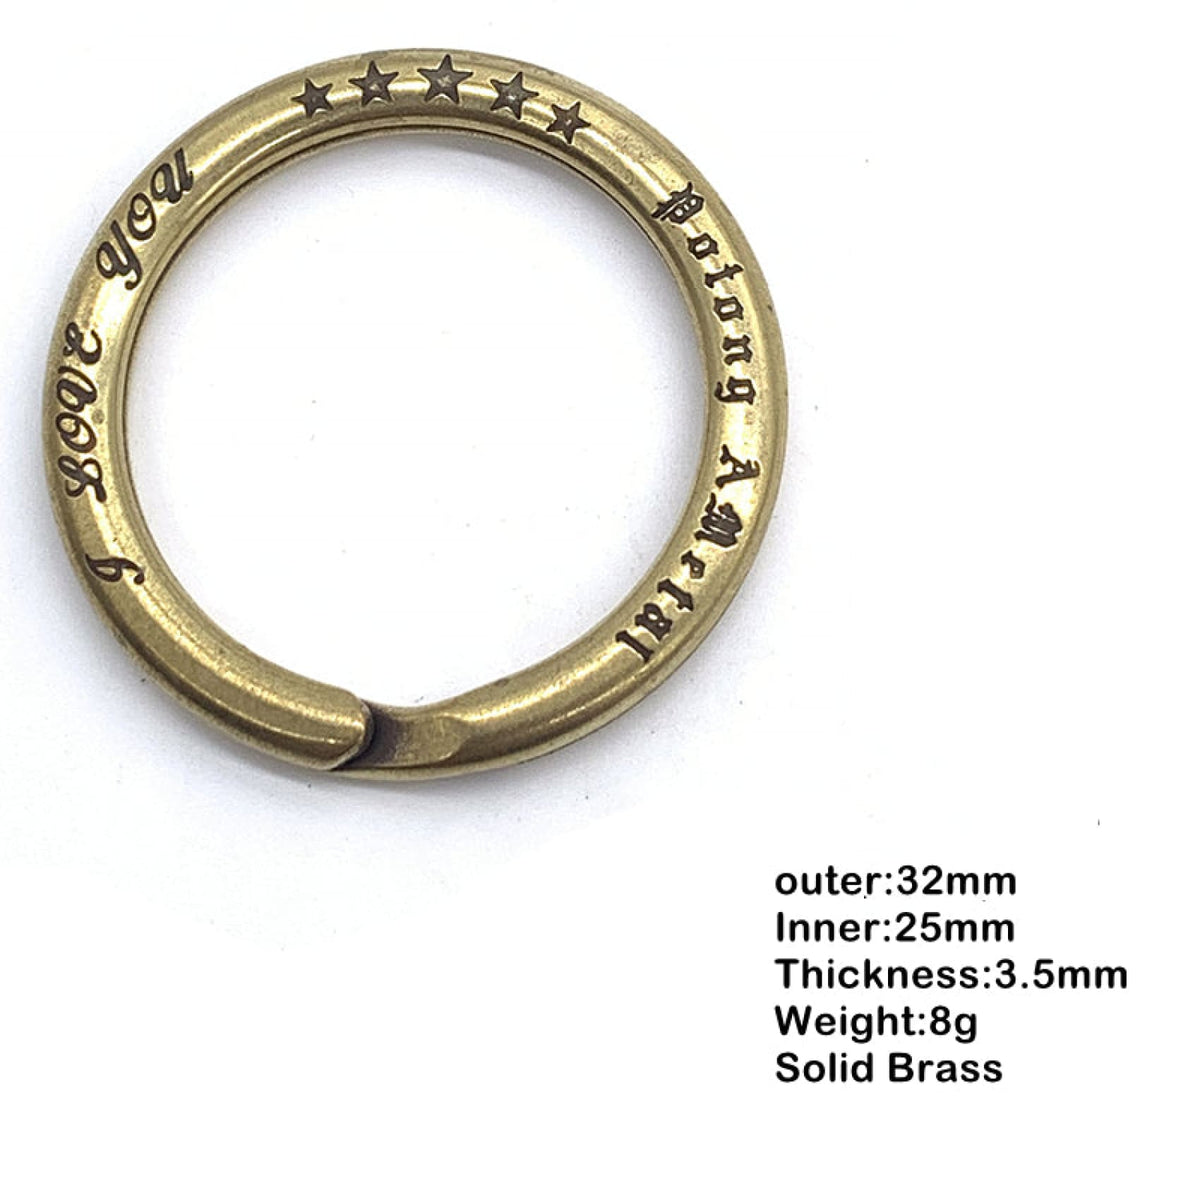 Bronze Split Key Rings - 25mm Iron Based Alloy, 5 pcs